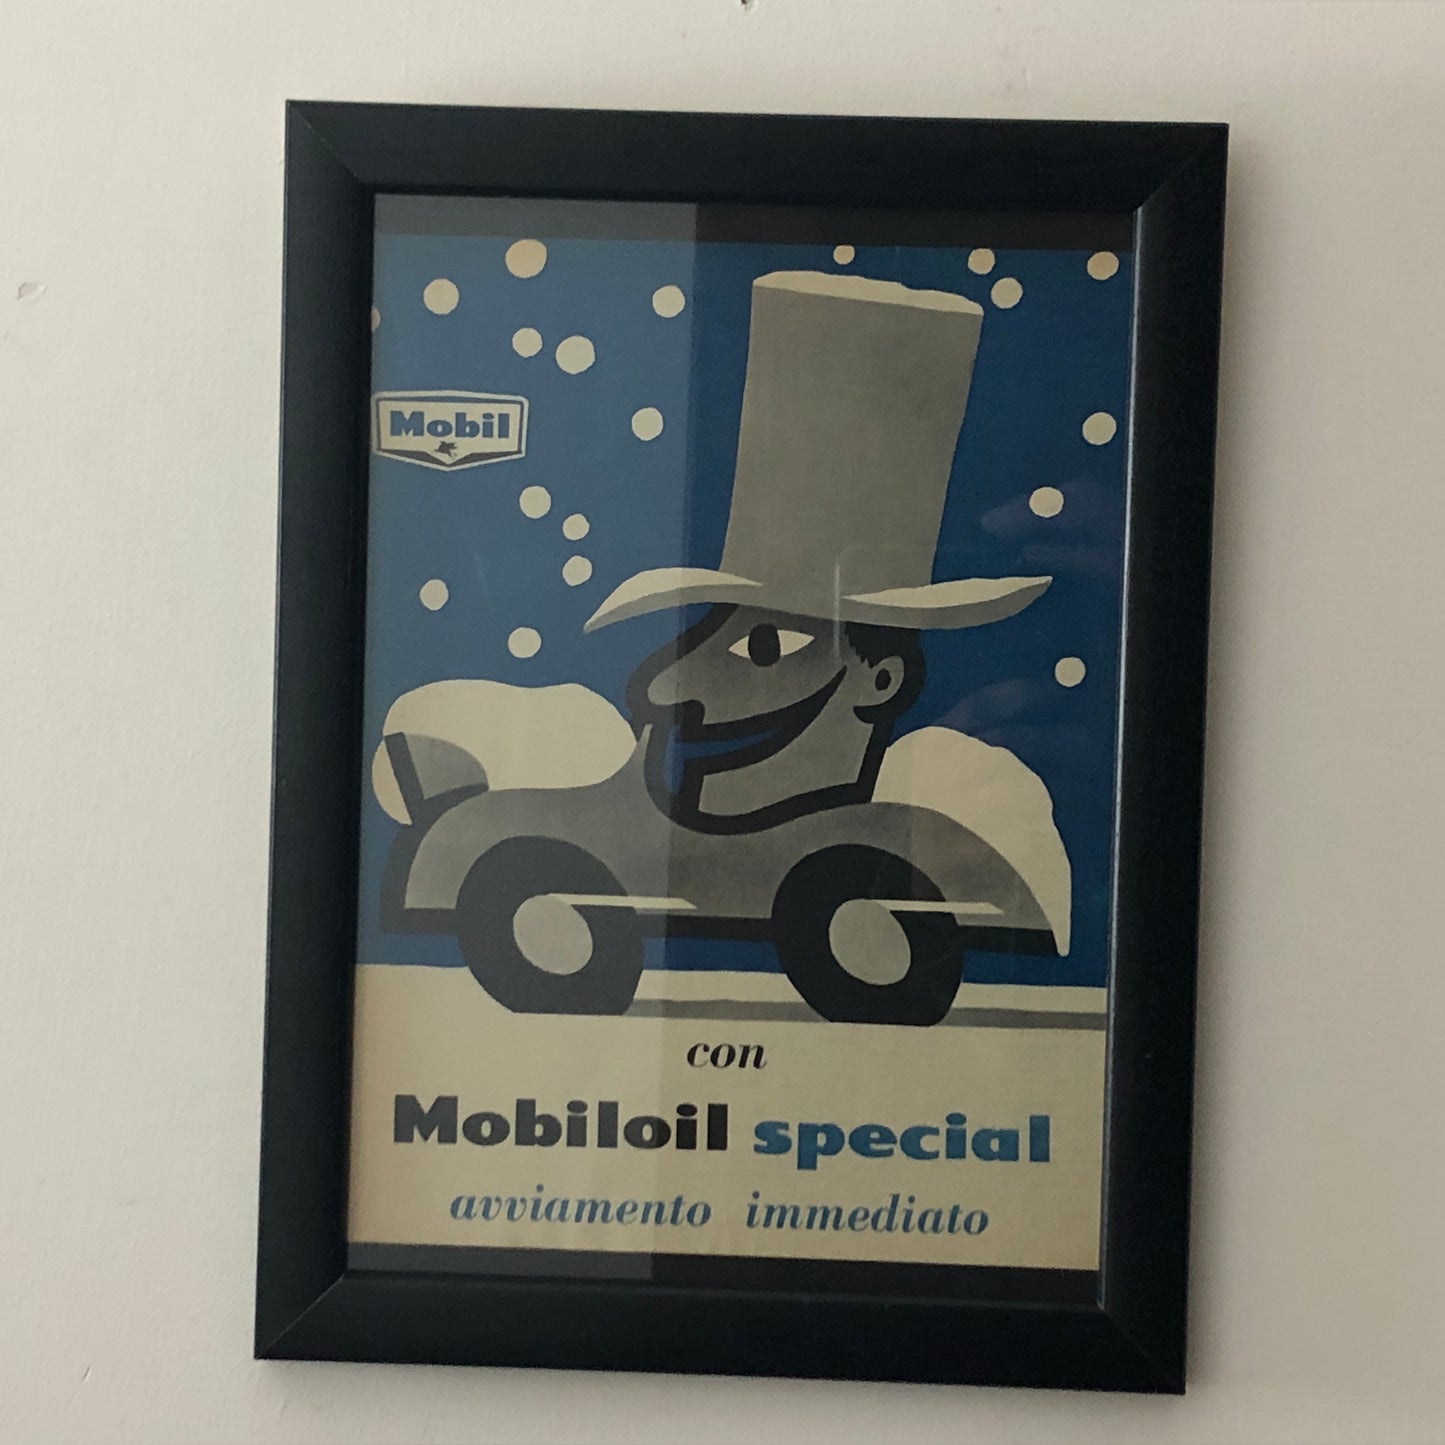 Mobil, Advertising Year 1960 Mobiloil Special Instant Start